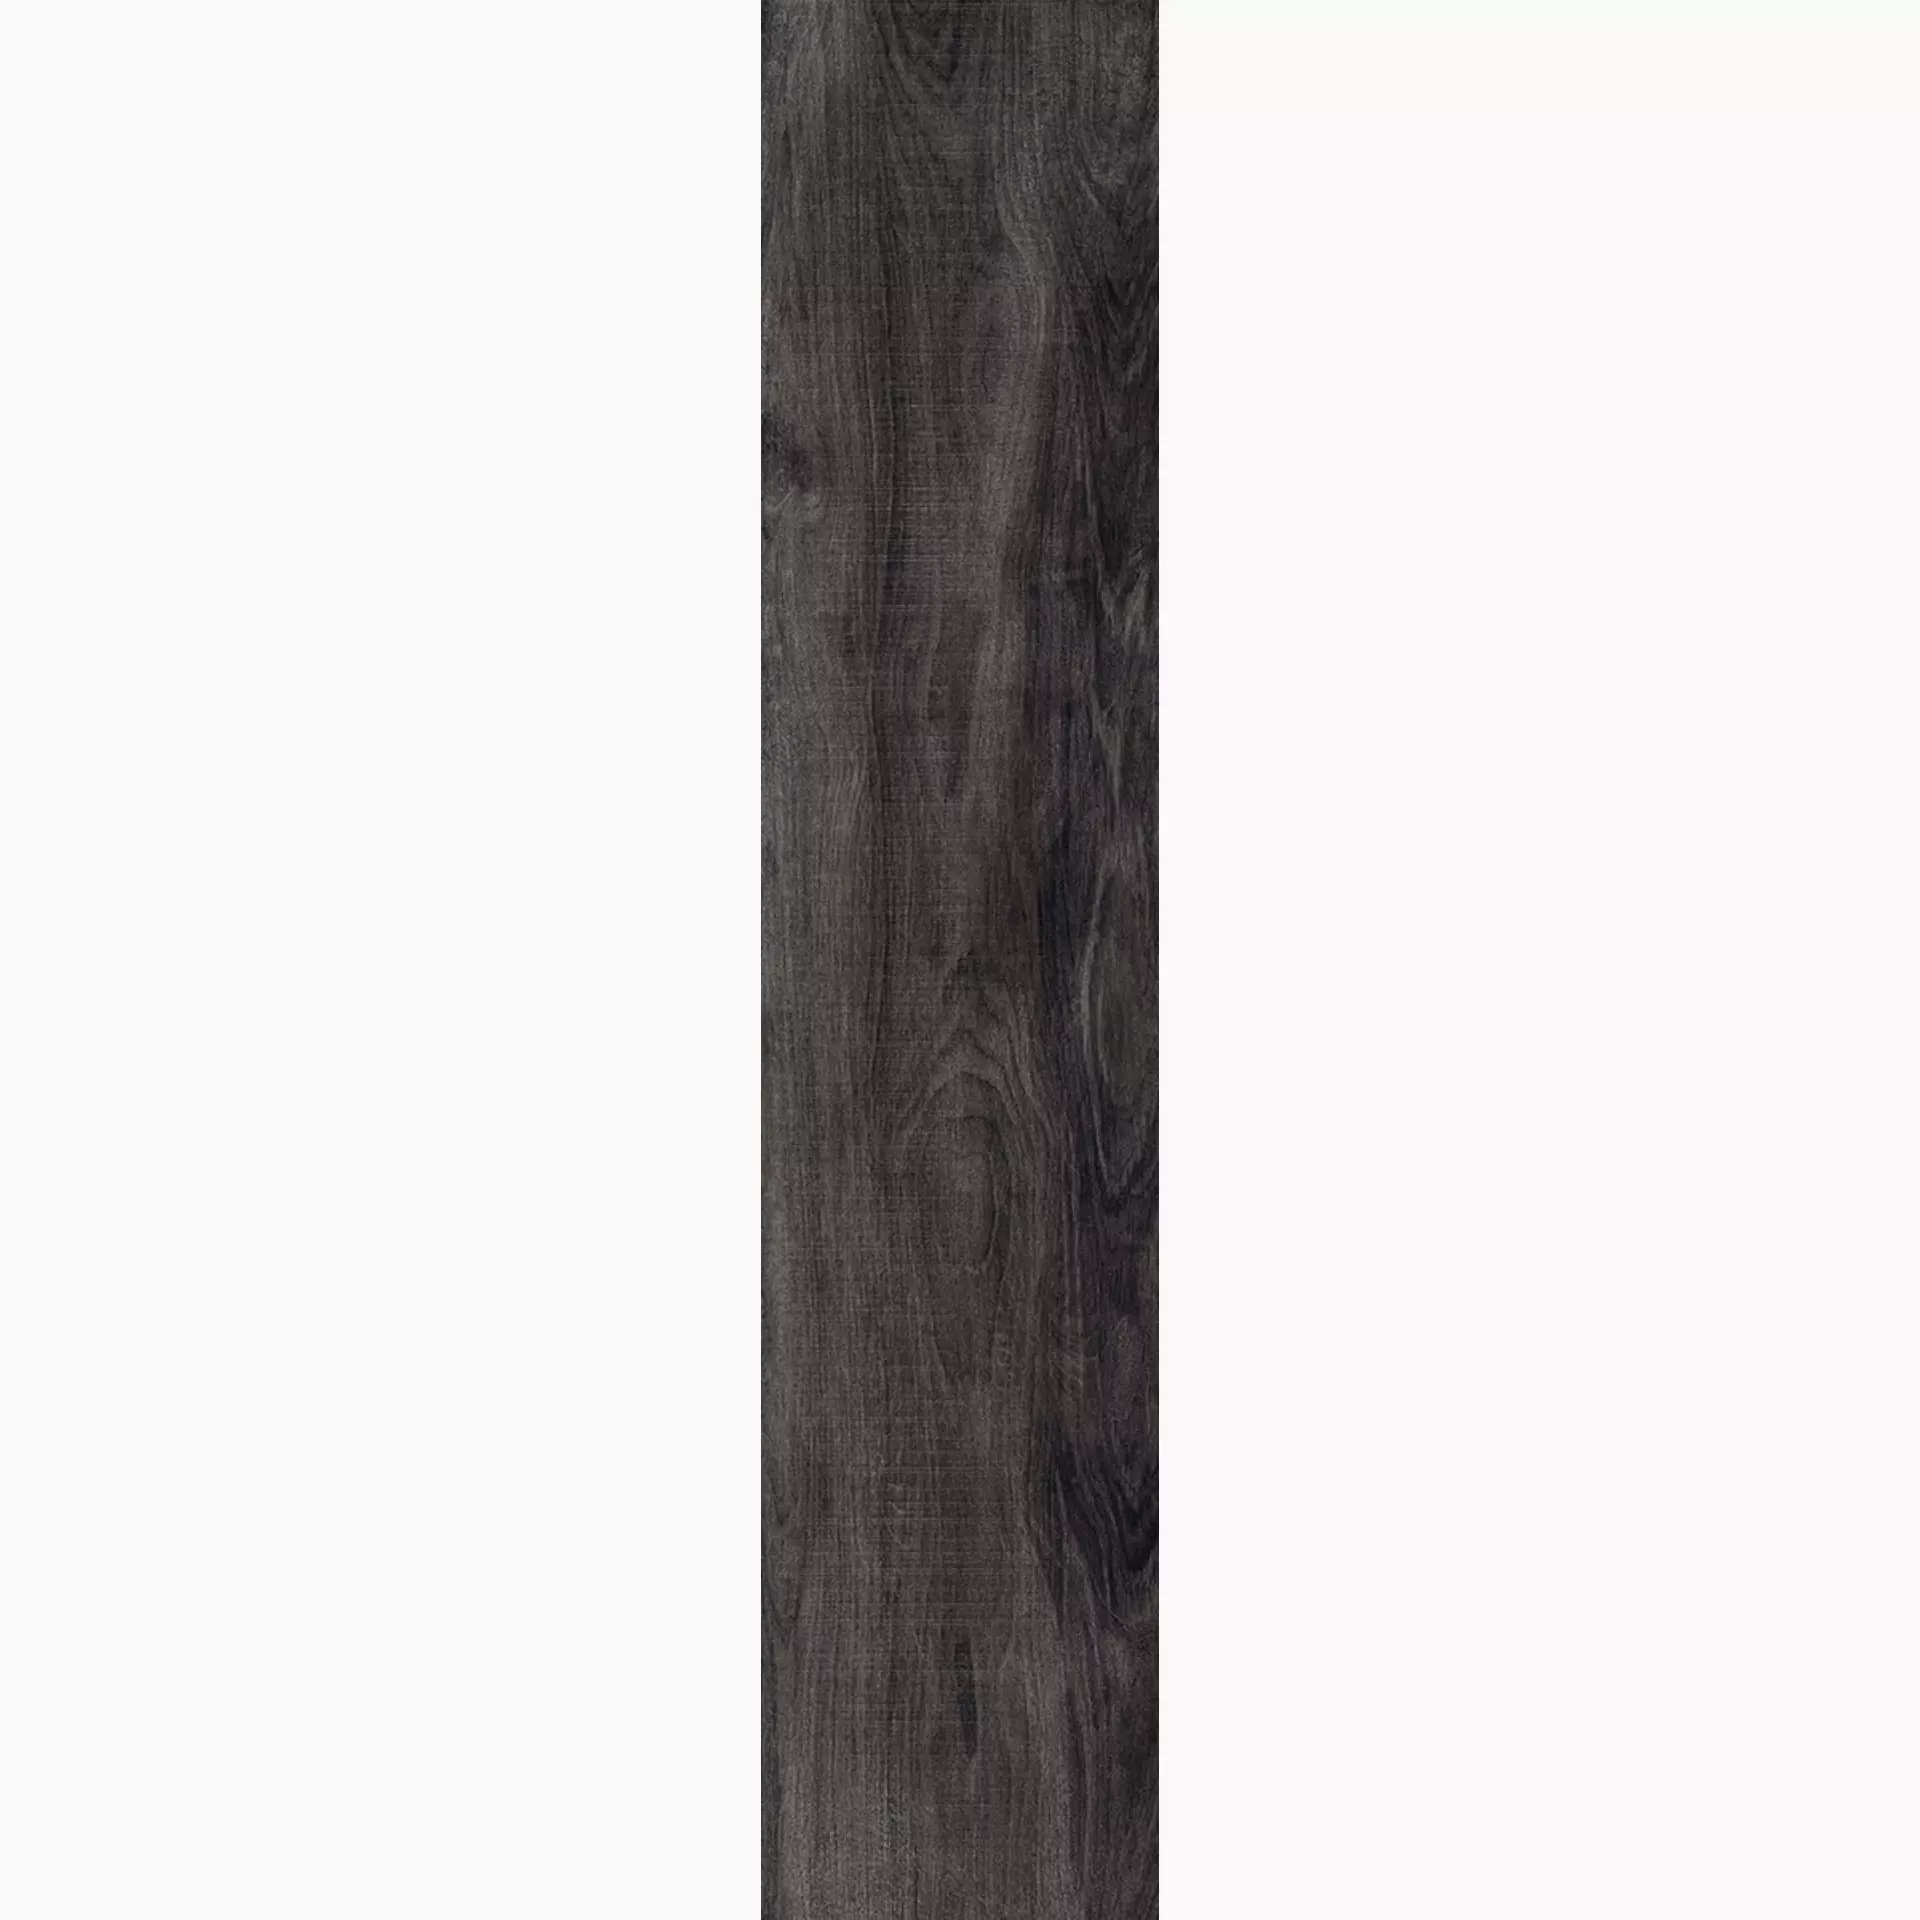 Rondine Greenwood Nero Naturale J86329 24x120cm 8,5mm